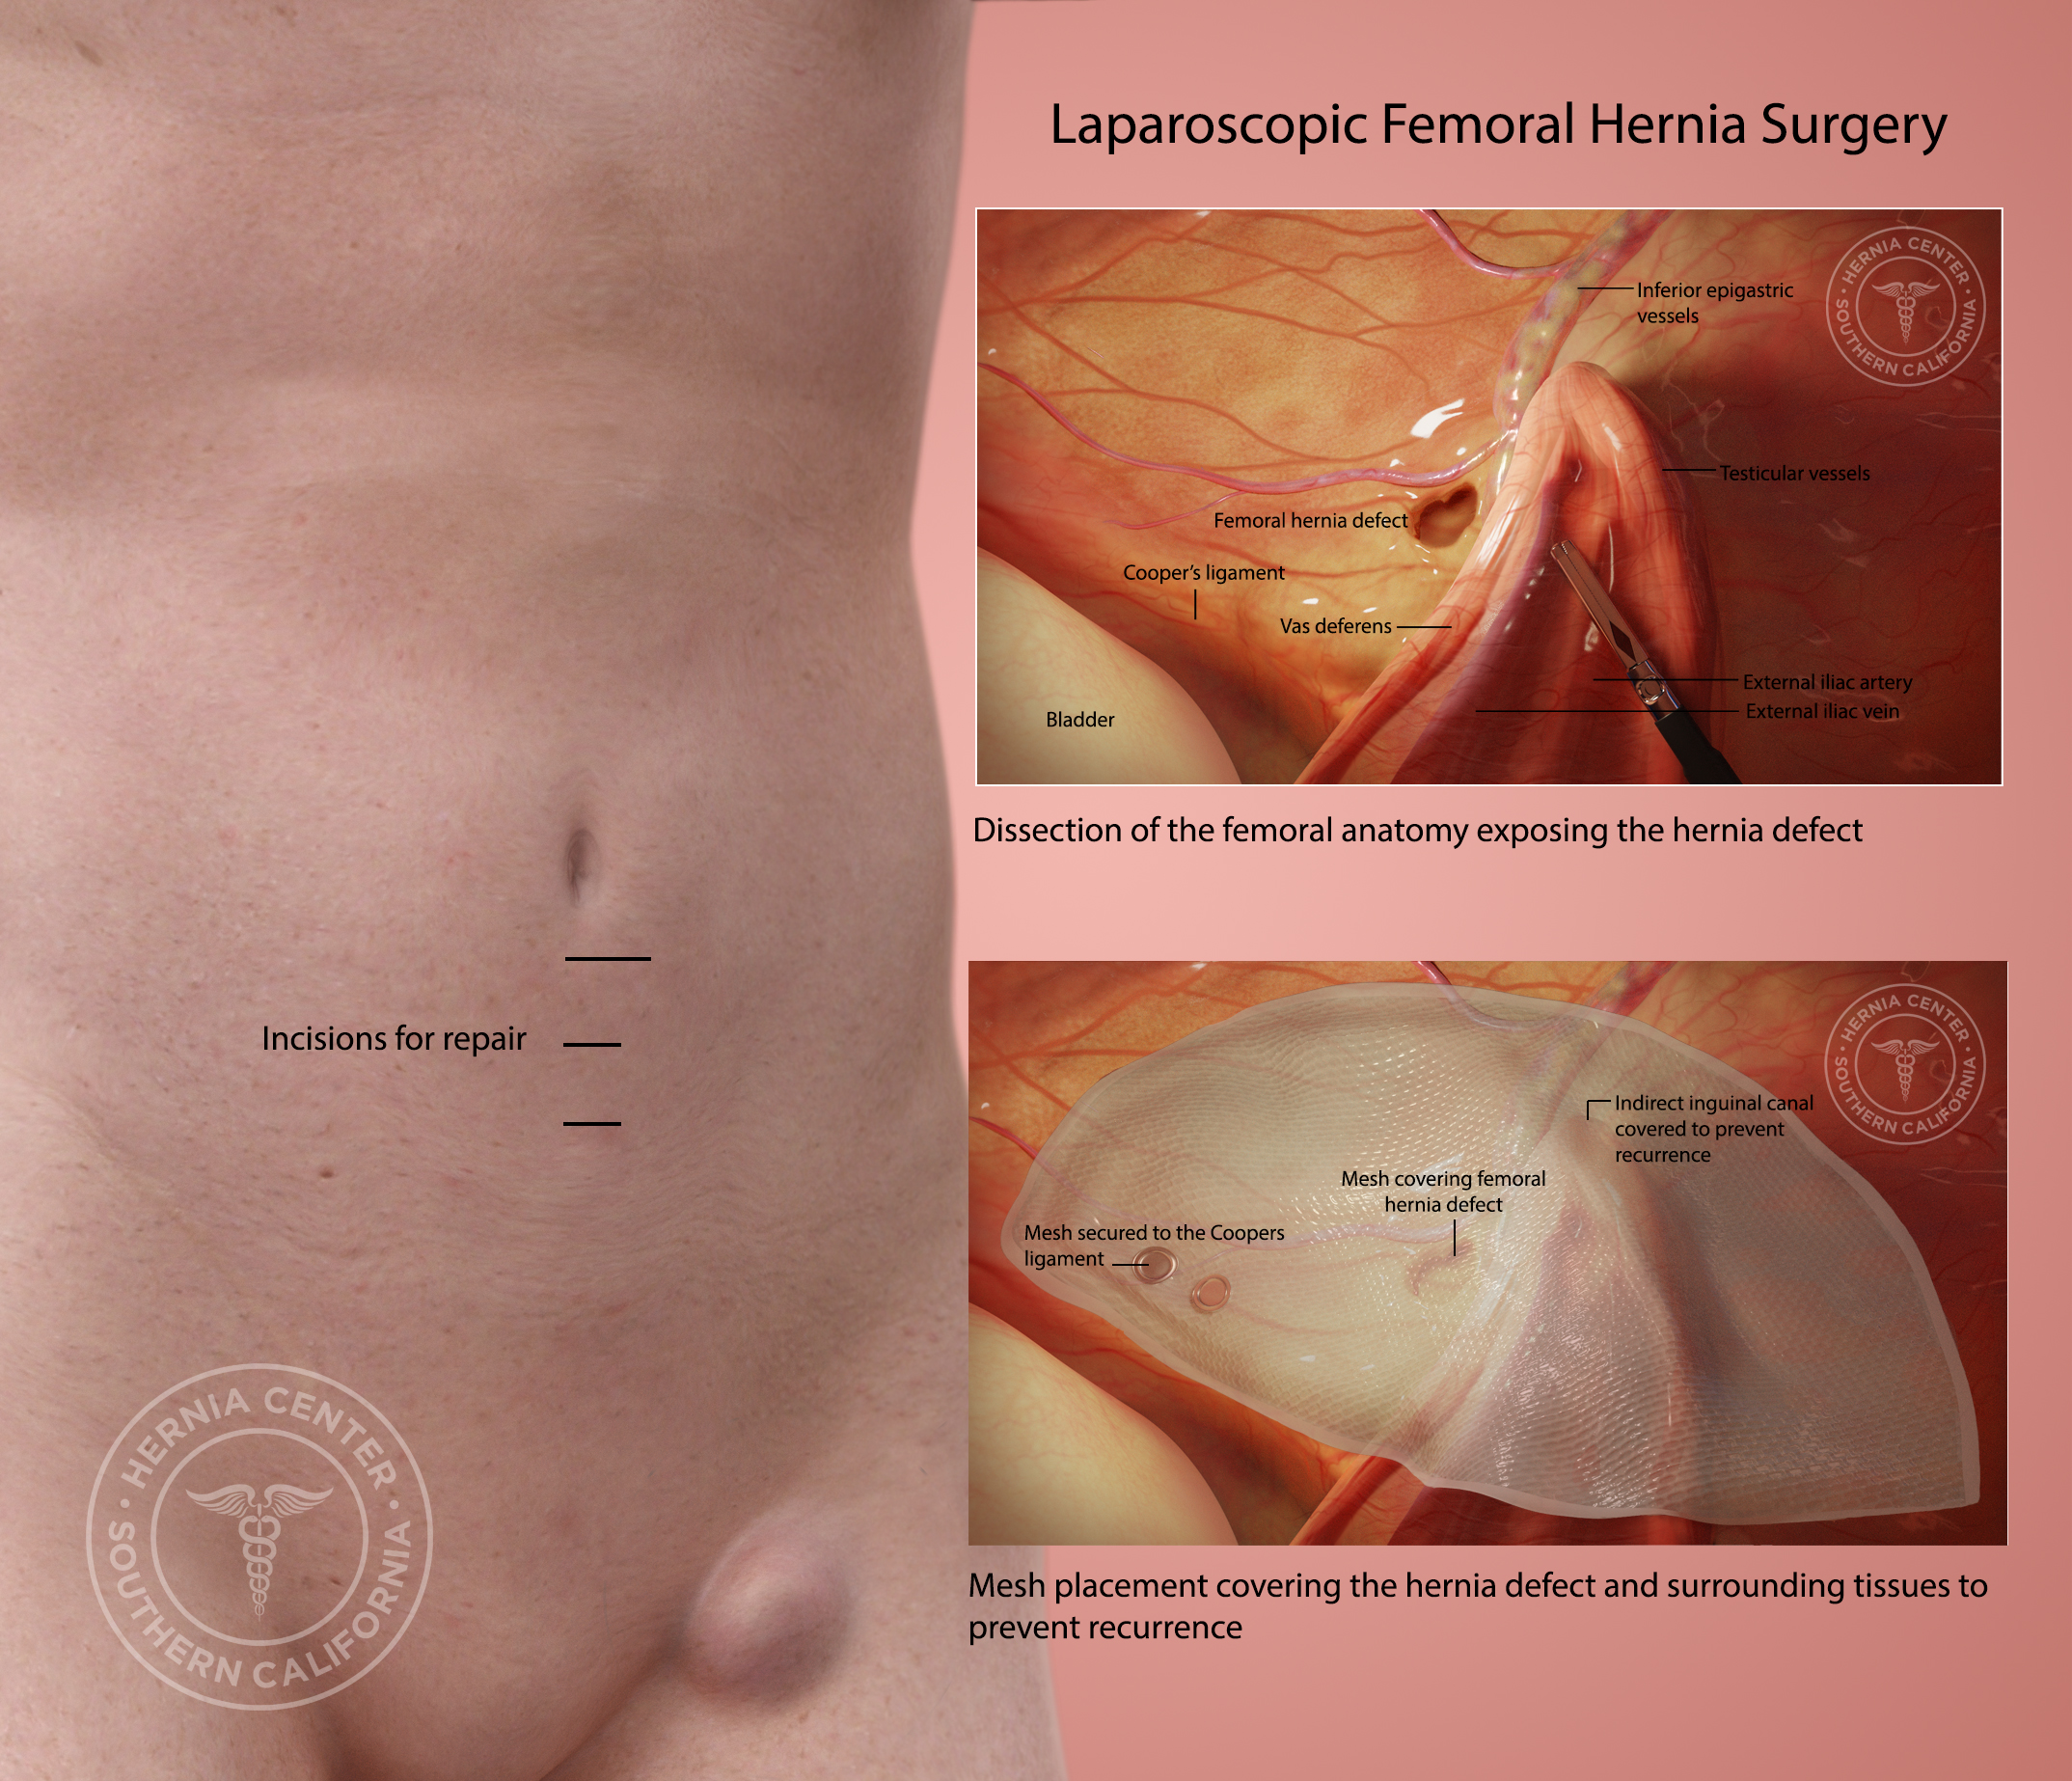 https://herniaonline.com/wp-content/uploads/Laparoscopic-femoral-hernia-surgery-2.jpg